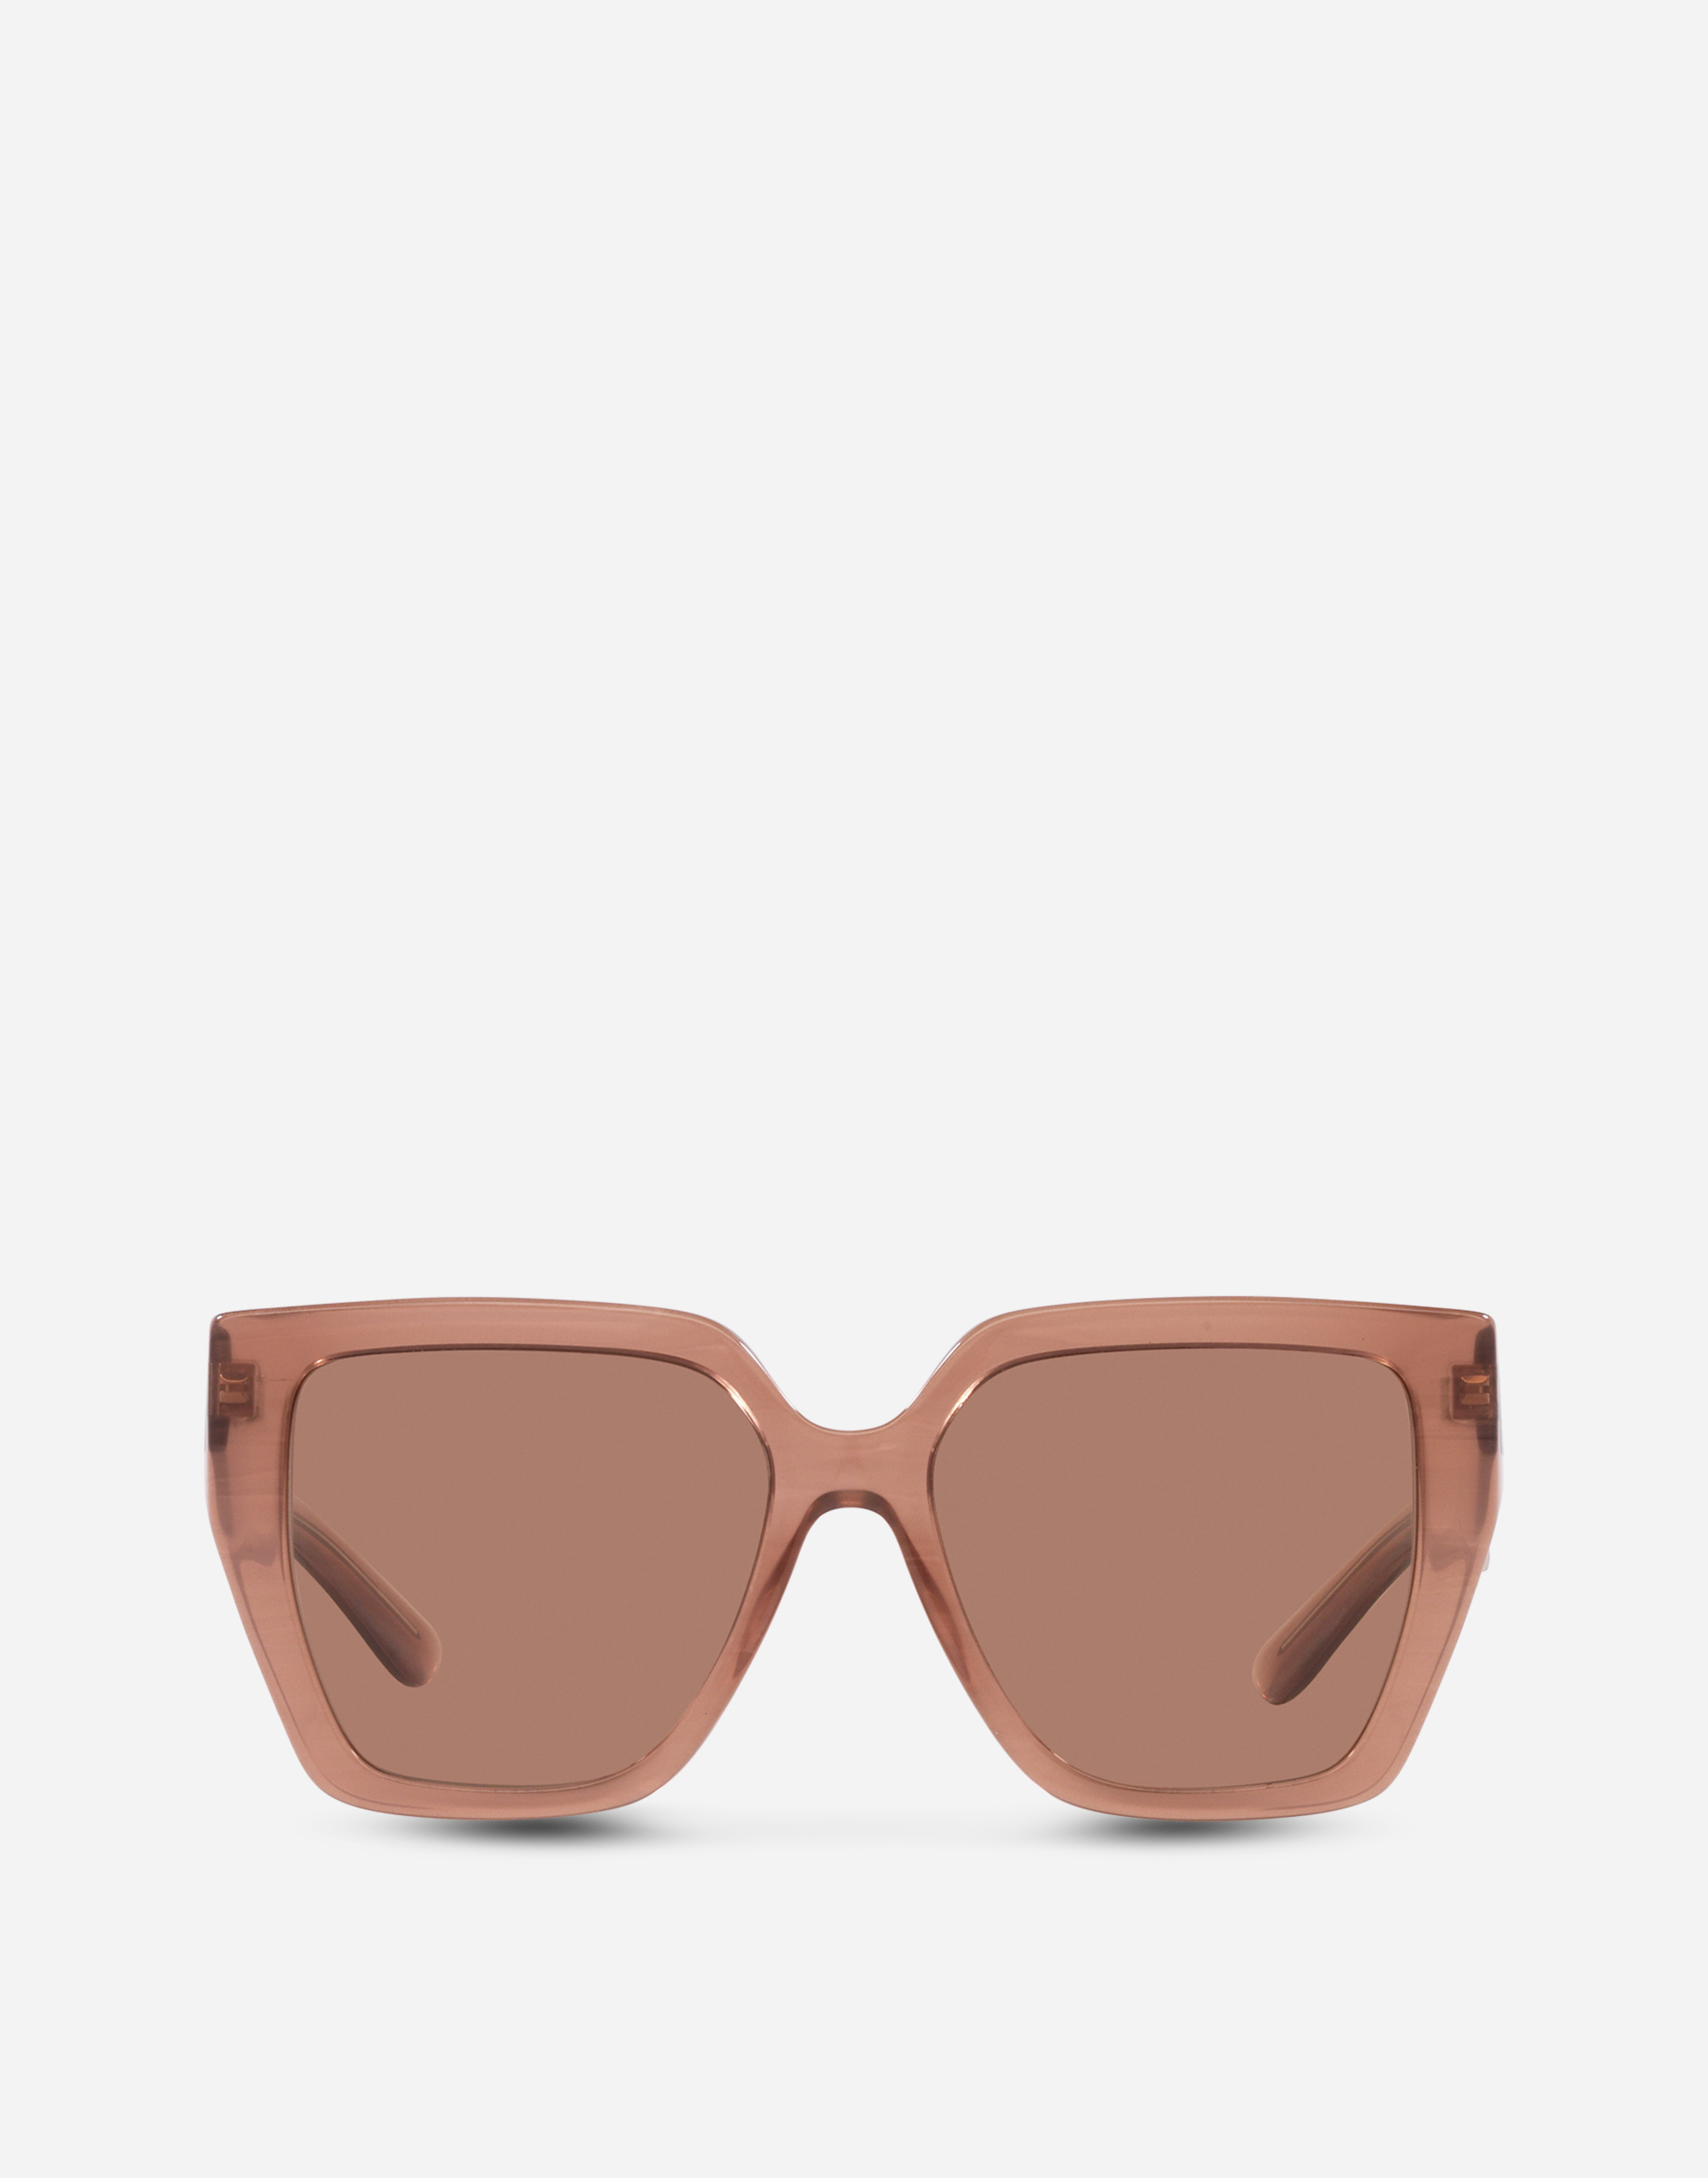 DG Crossed Sunglasses in Fleur caramel